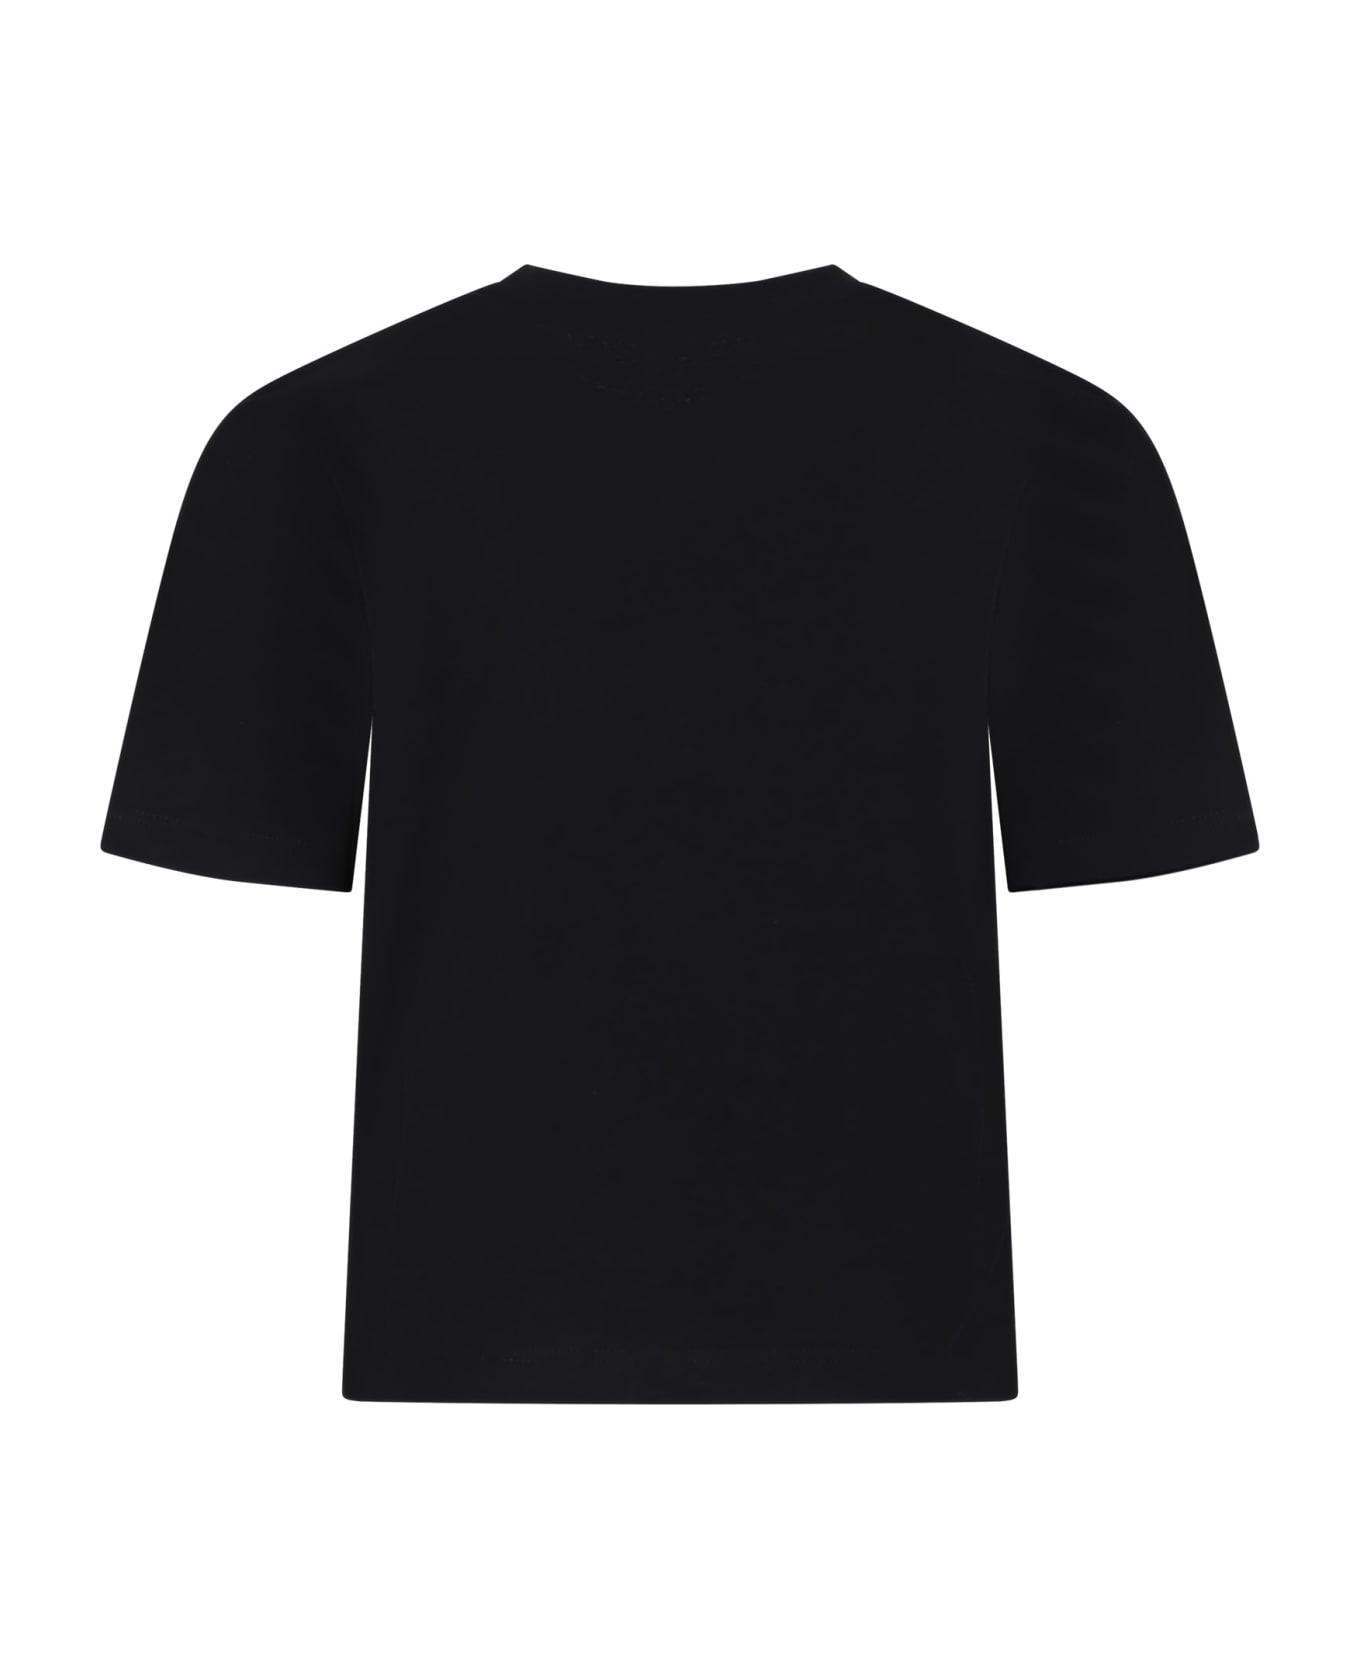 Stella McCartney Kids Black T-shirt For Girl With Multicolor Logo - Black